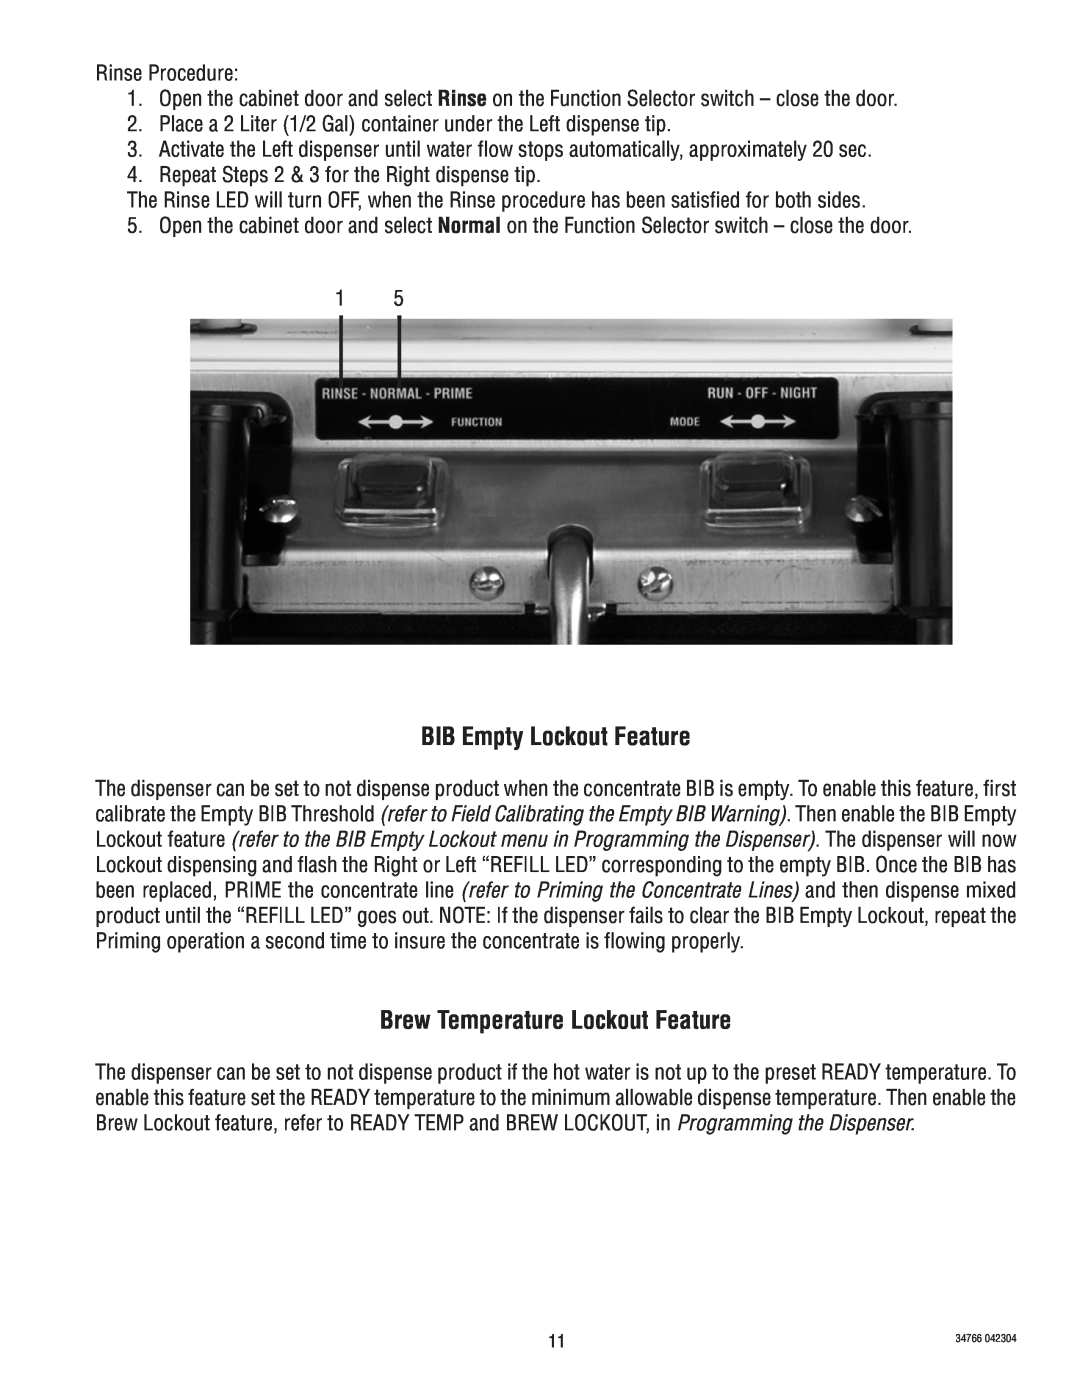 Bunn LCA-2 PC, LCC-2 manual BIB Empty Lockout Feature, Brew Temperature Lockout Feature 